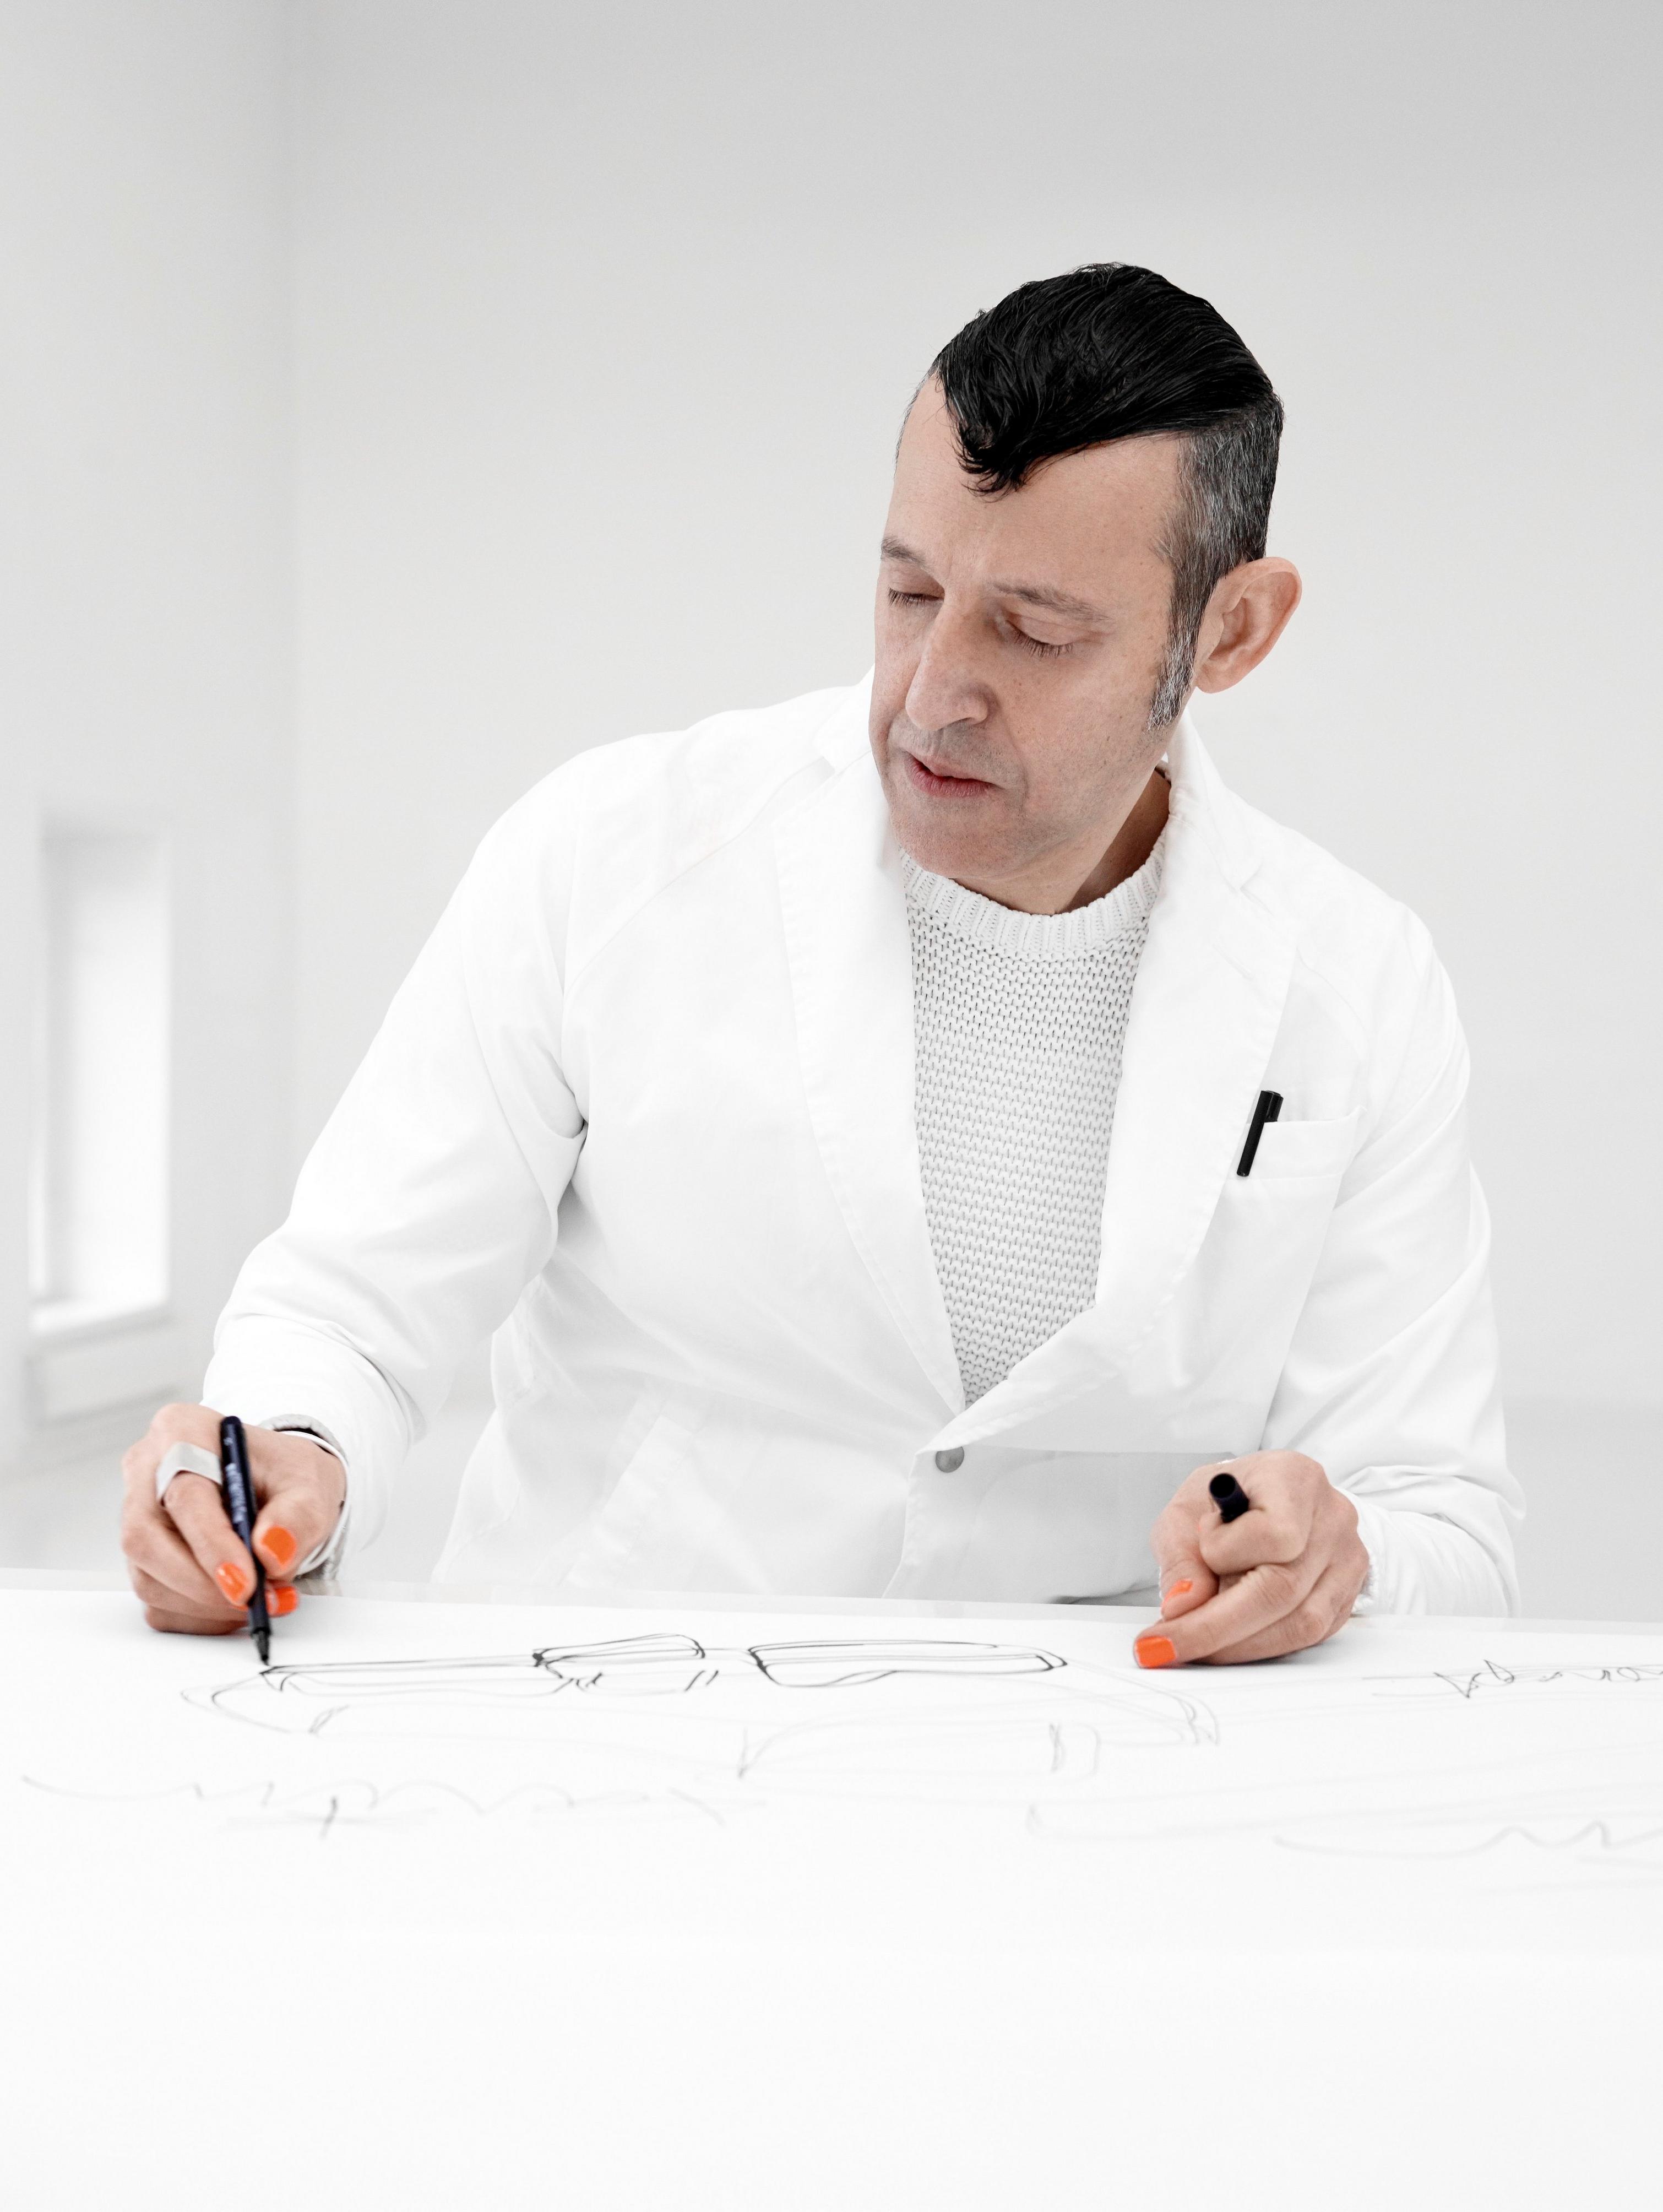 Karim Rashid deep in the zone of developing new designs